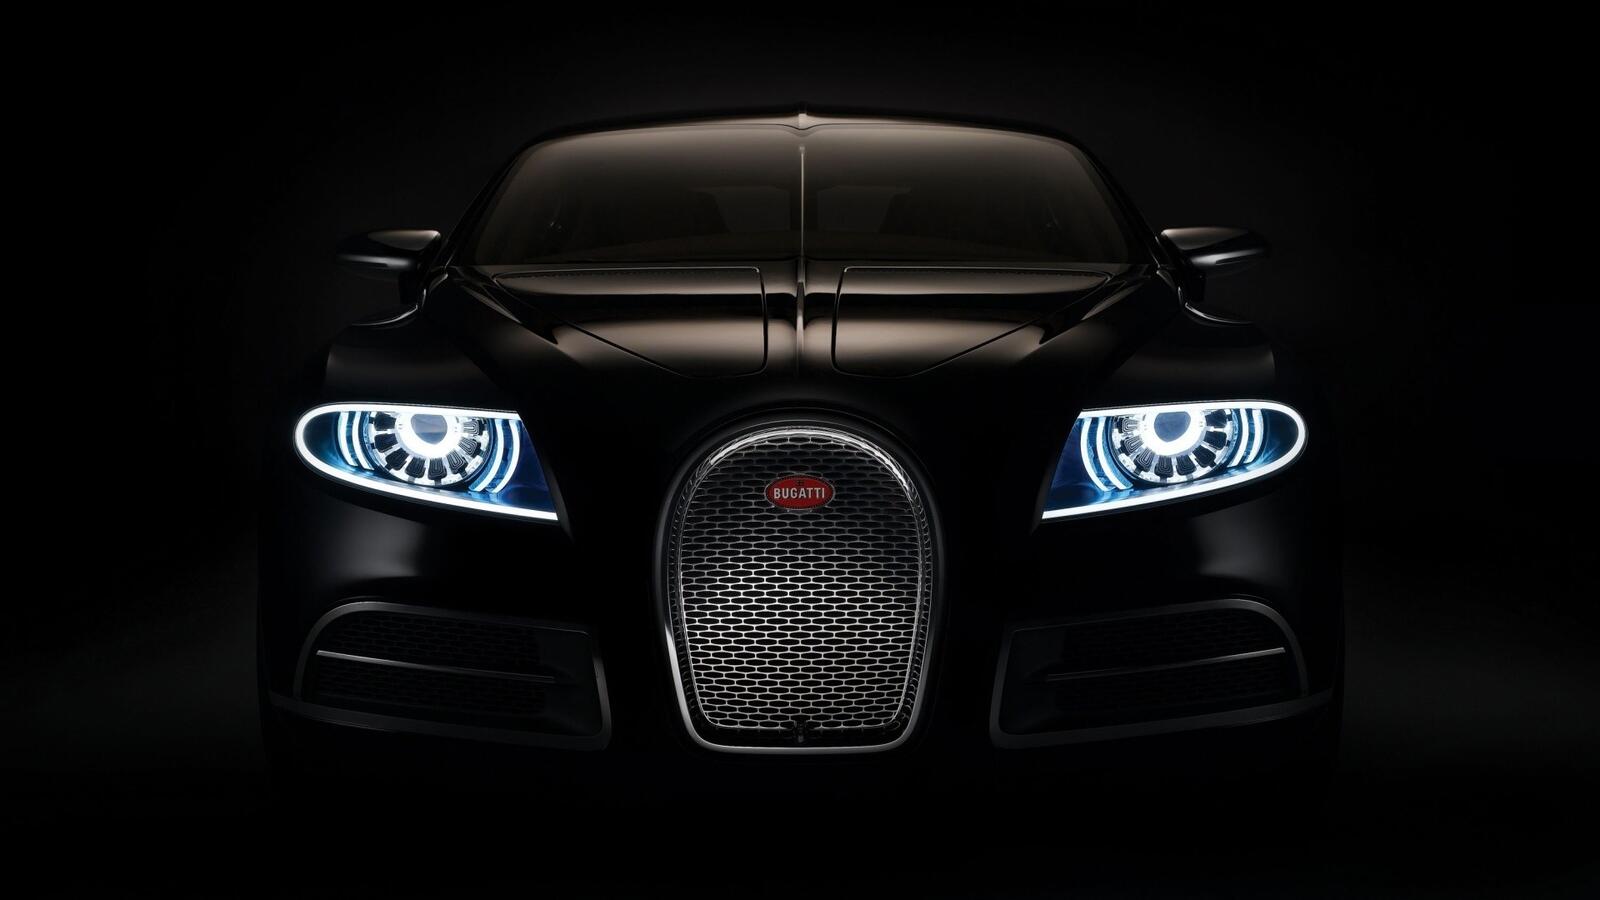 Wallpapers Bugatti Veyron headlights black background on the desktop